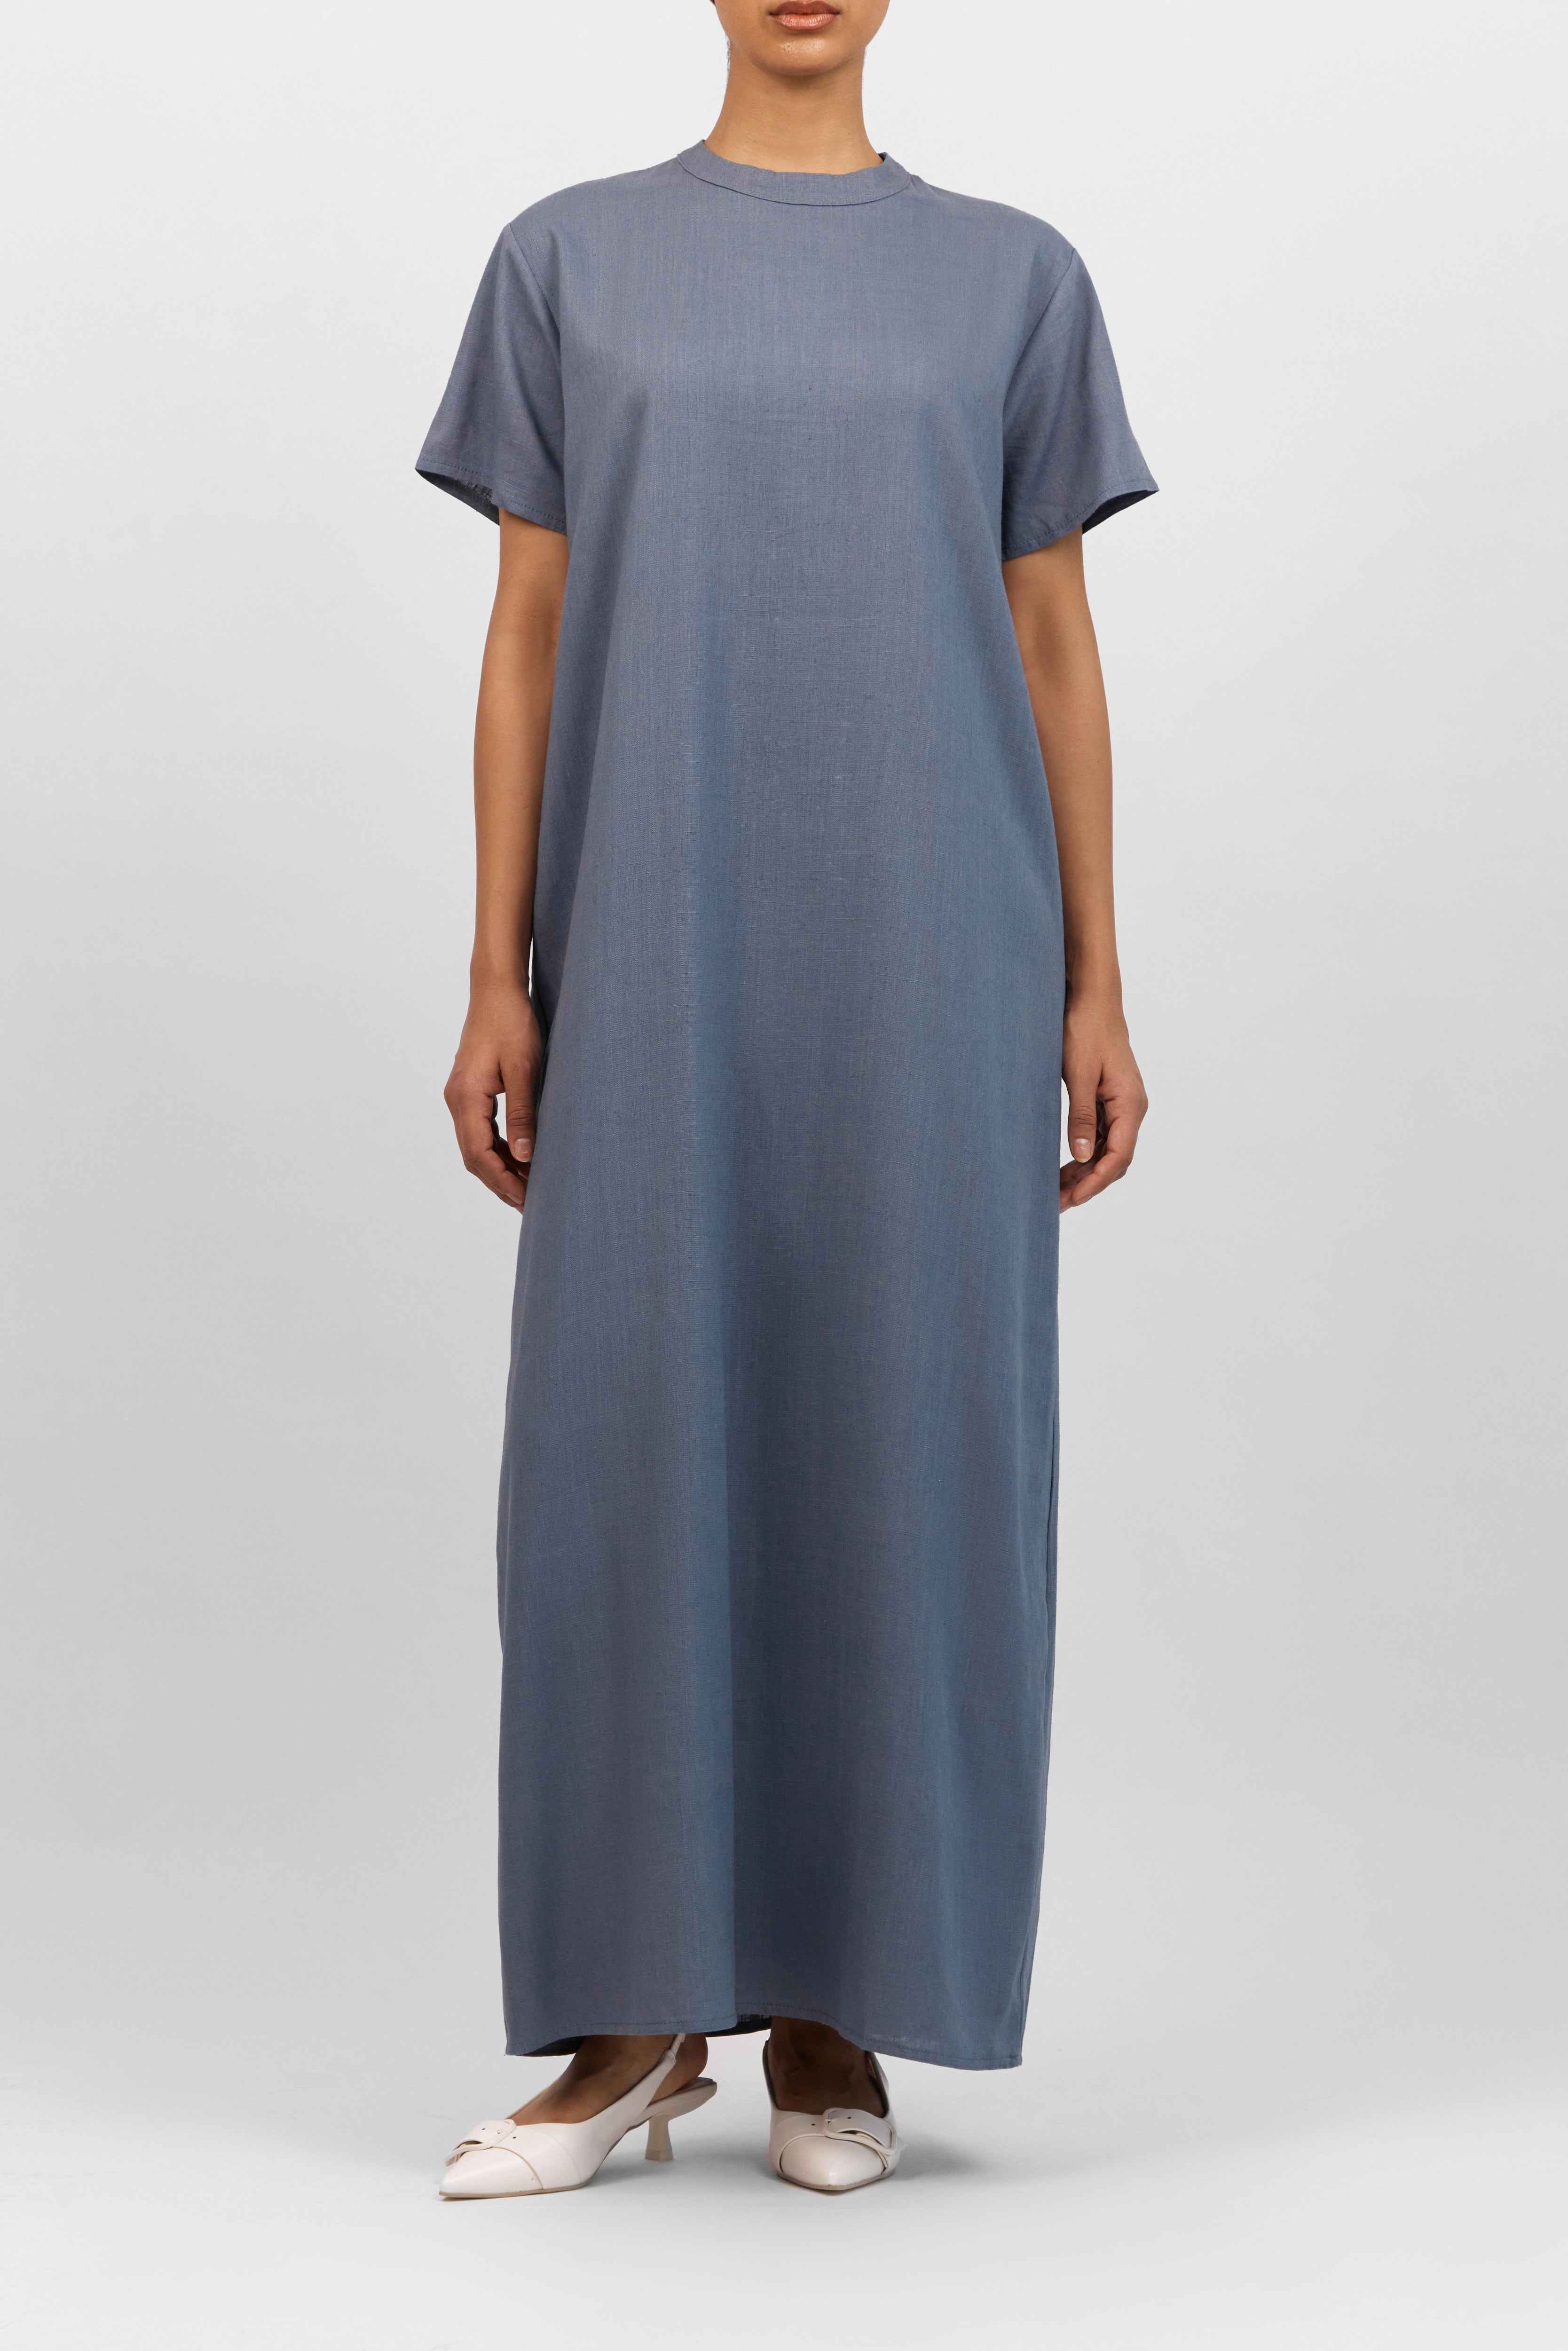 AE - Linen Blend Abaya Set - Denim